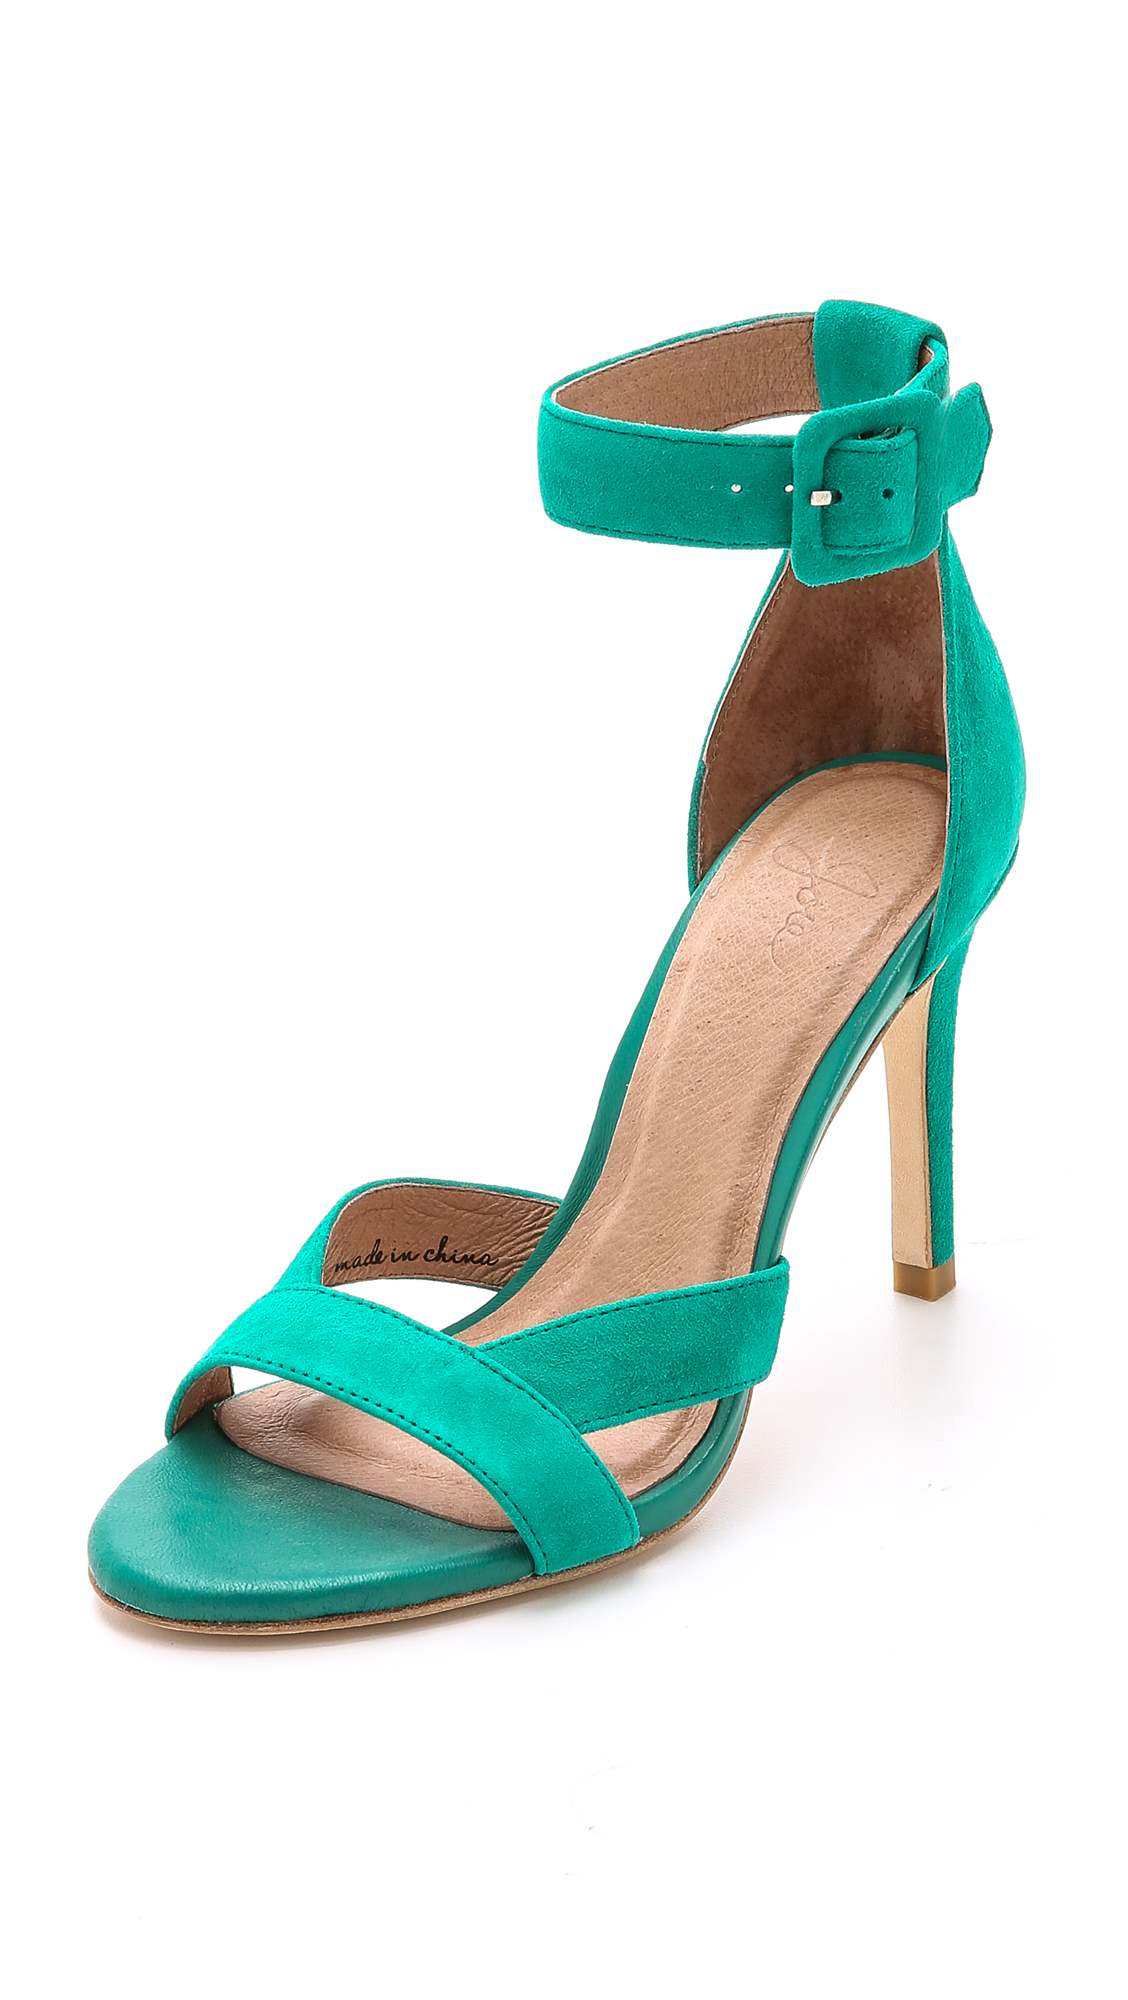 Lyst - Joie Alvita Suede Sandals - Tropic in Green